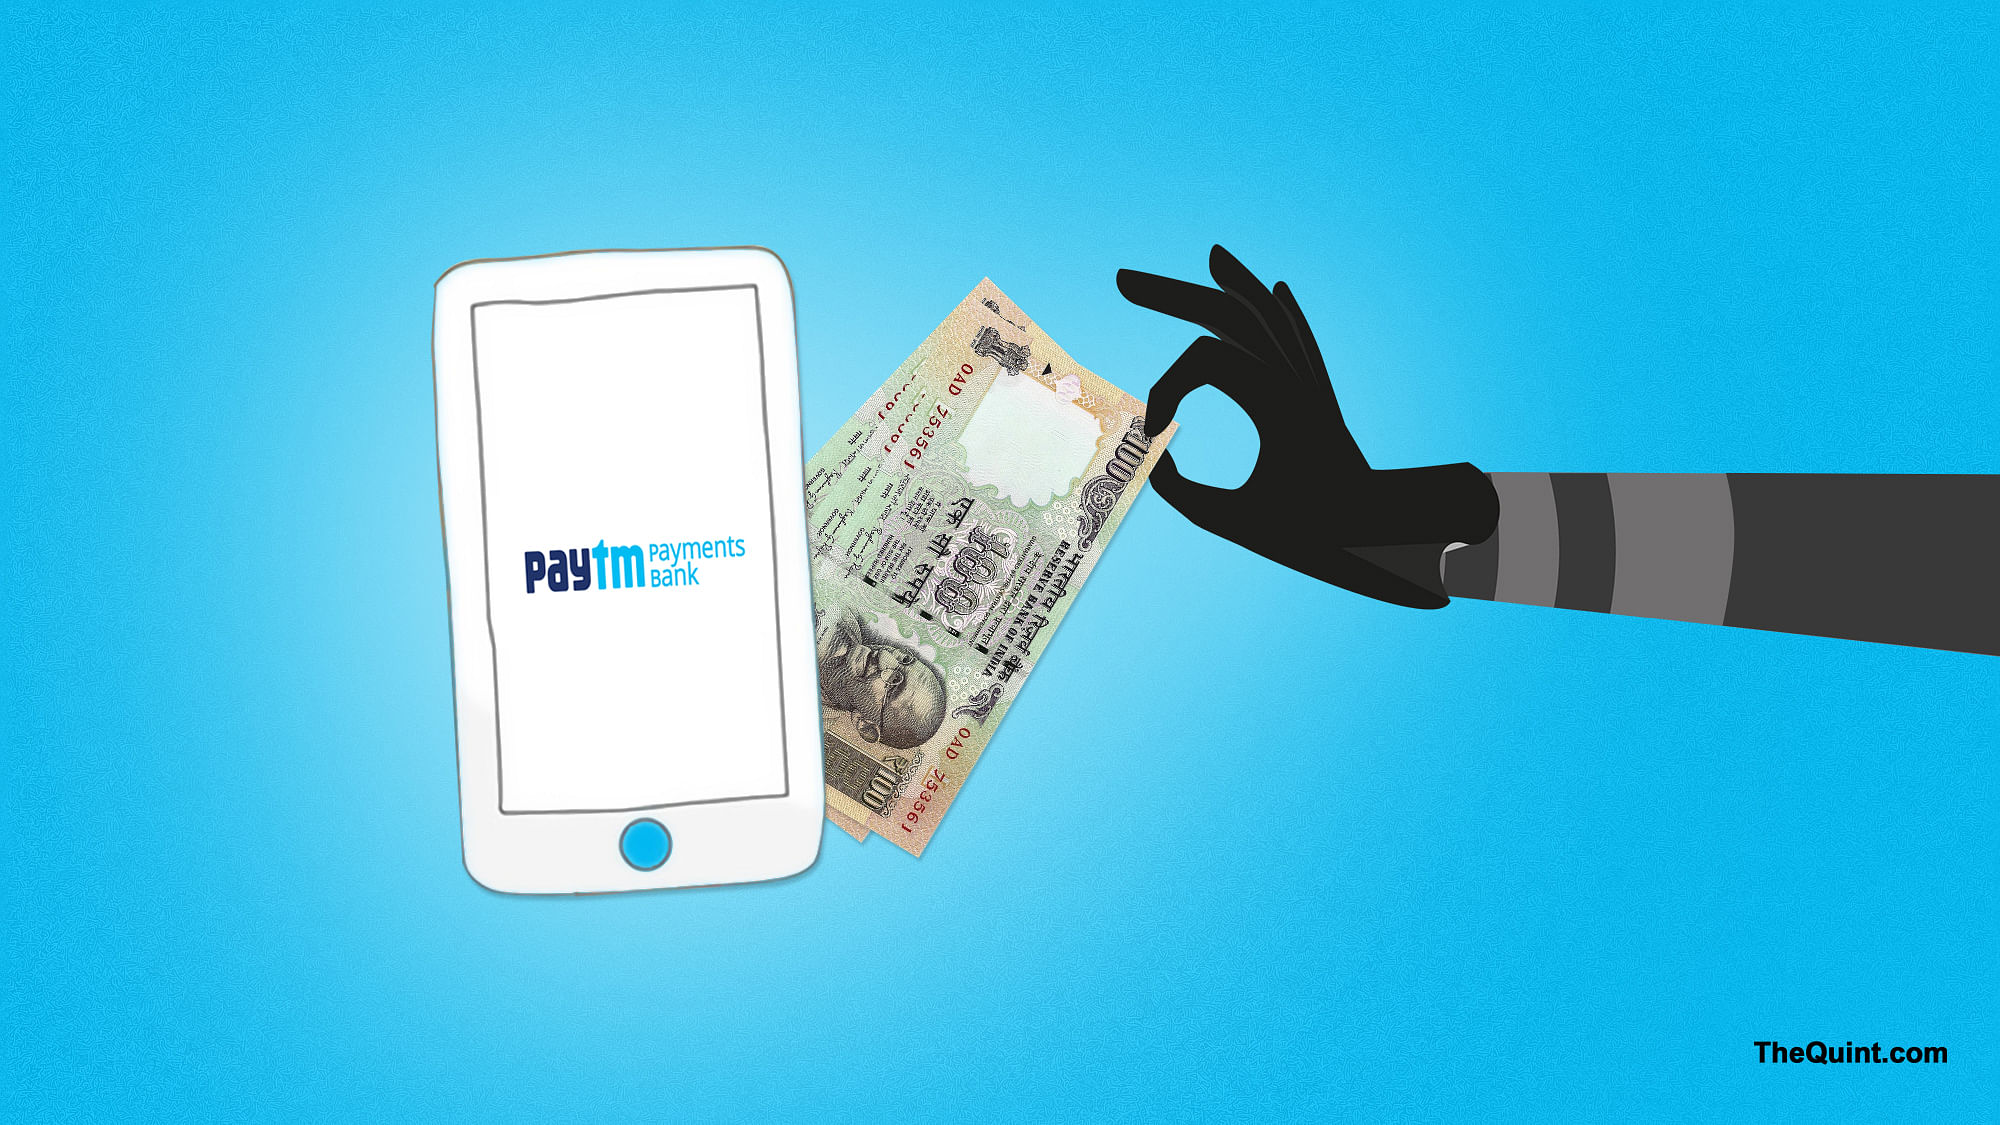 Paytm Payments Bank operates via the Paytm app itself.